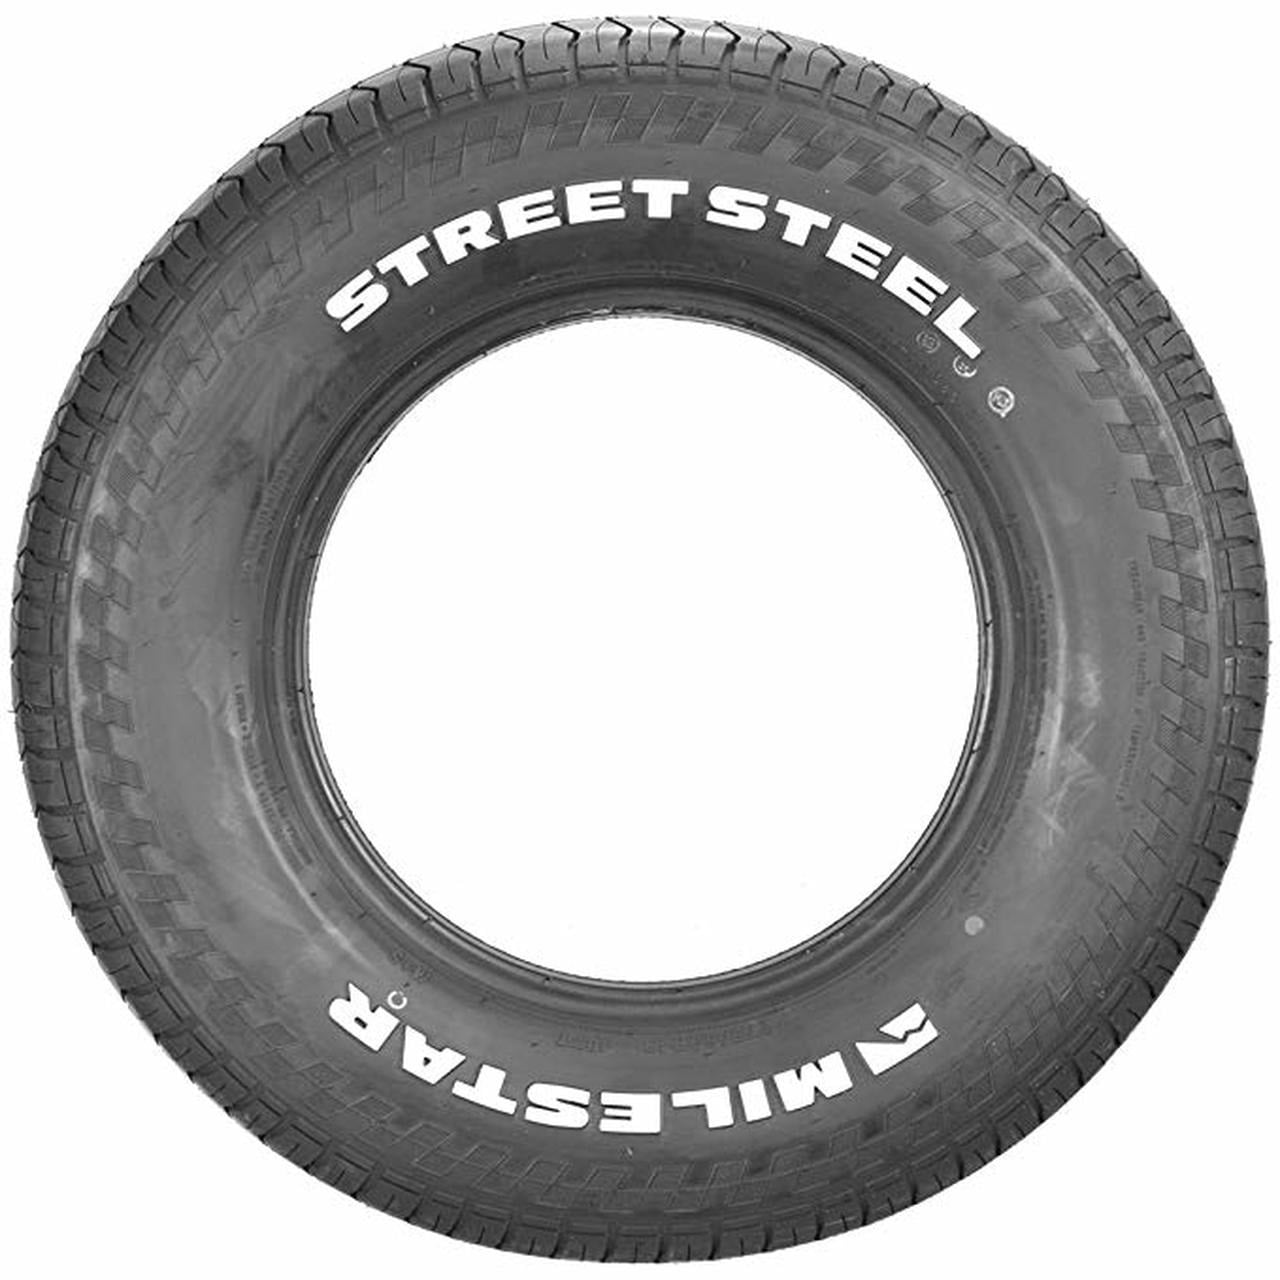 Milestar StreetSteel 255/70R15 108T All-Season Tire